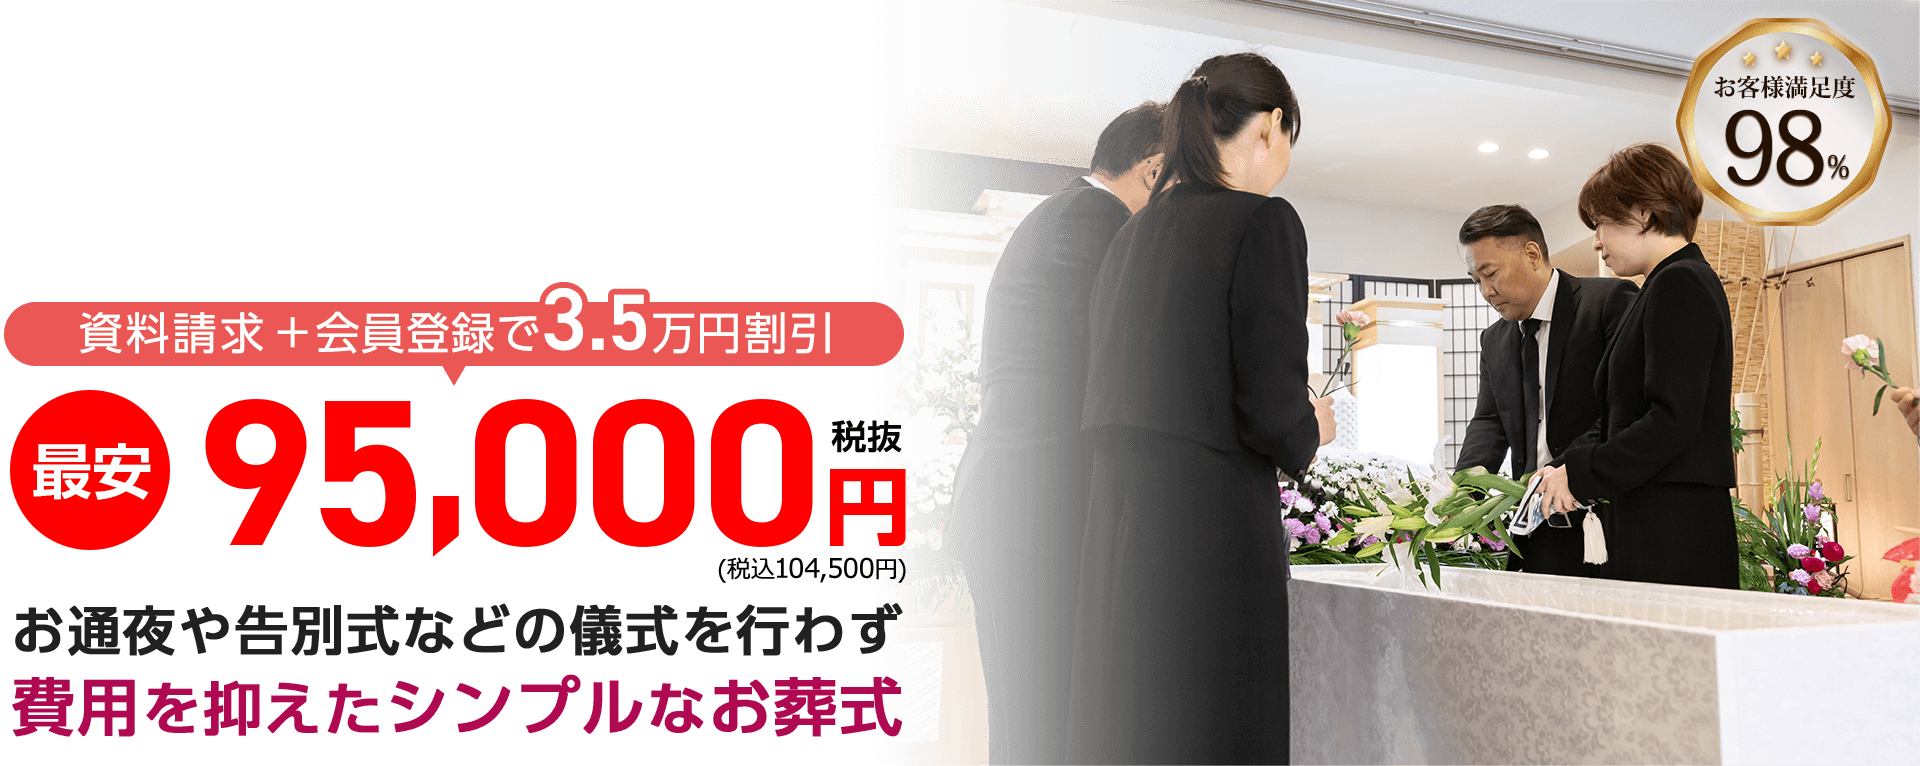 江戸川区で最安価格を実現 直葬･火葬式